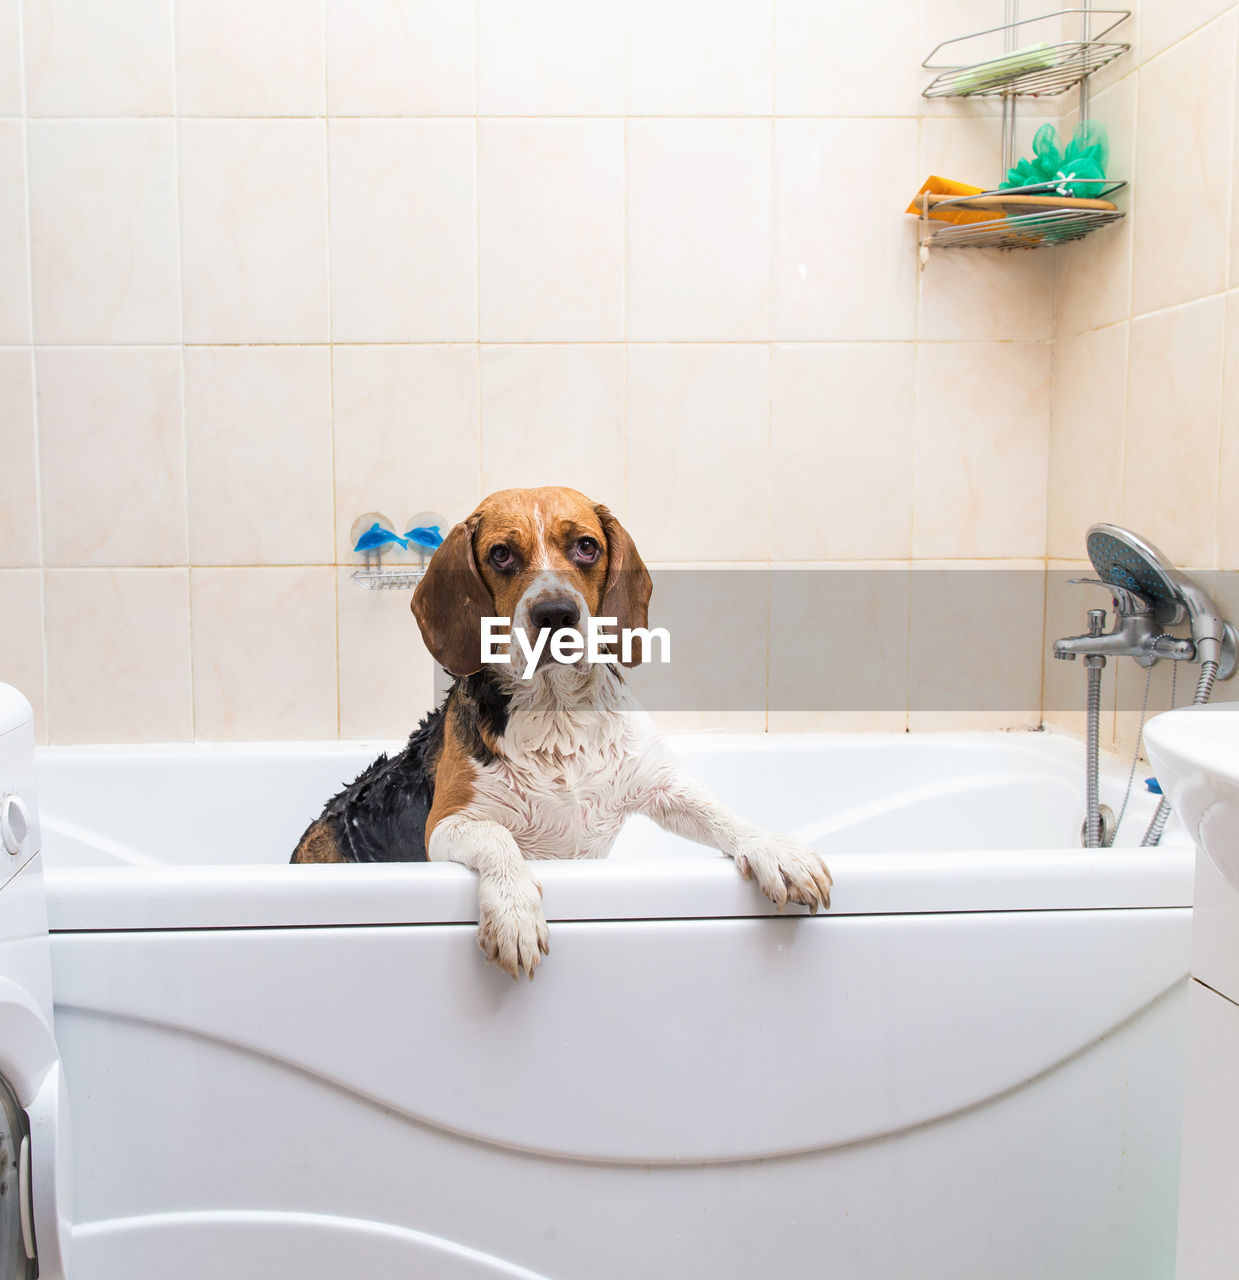 DOG IN BATHROOM